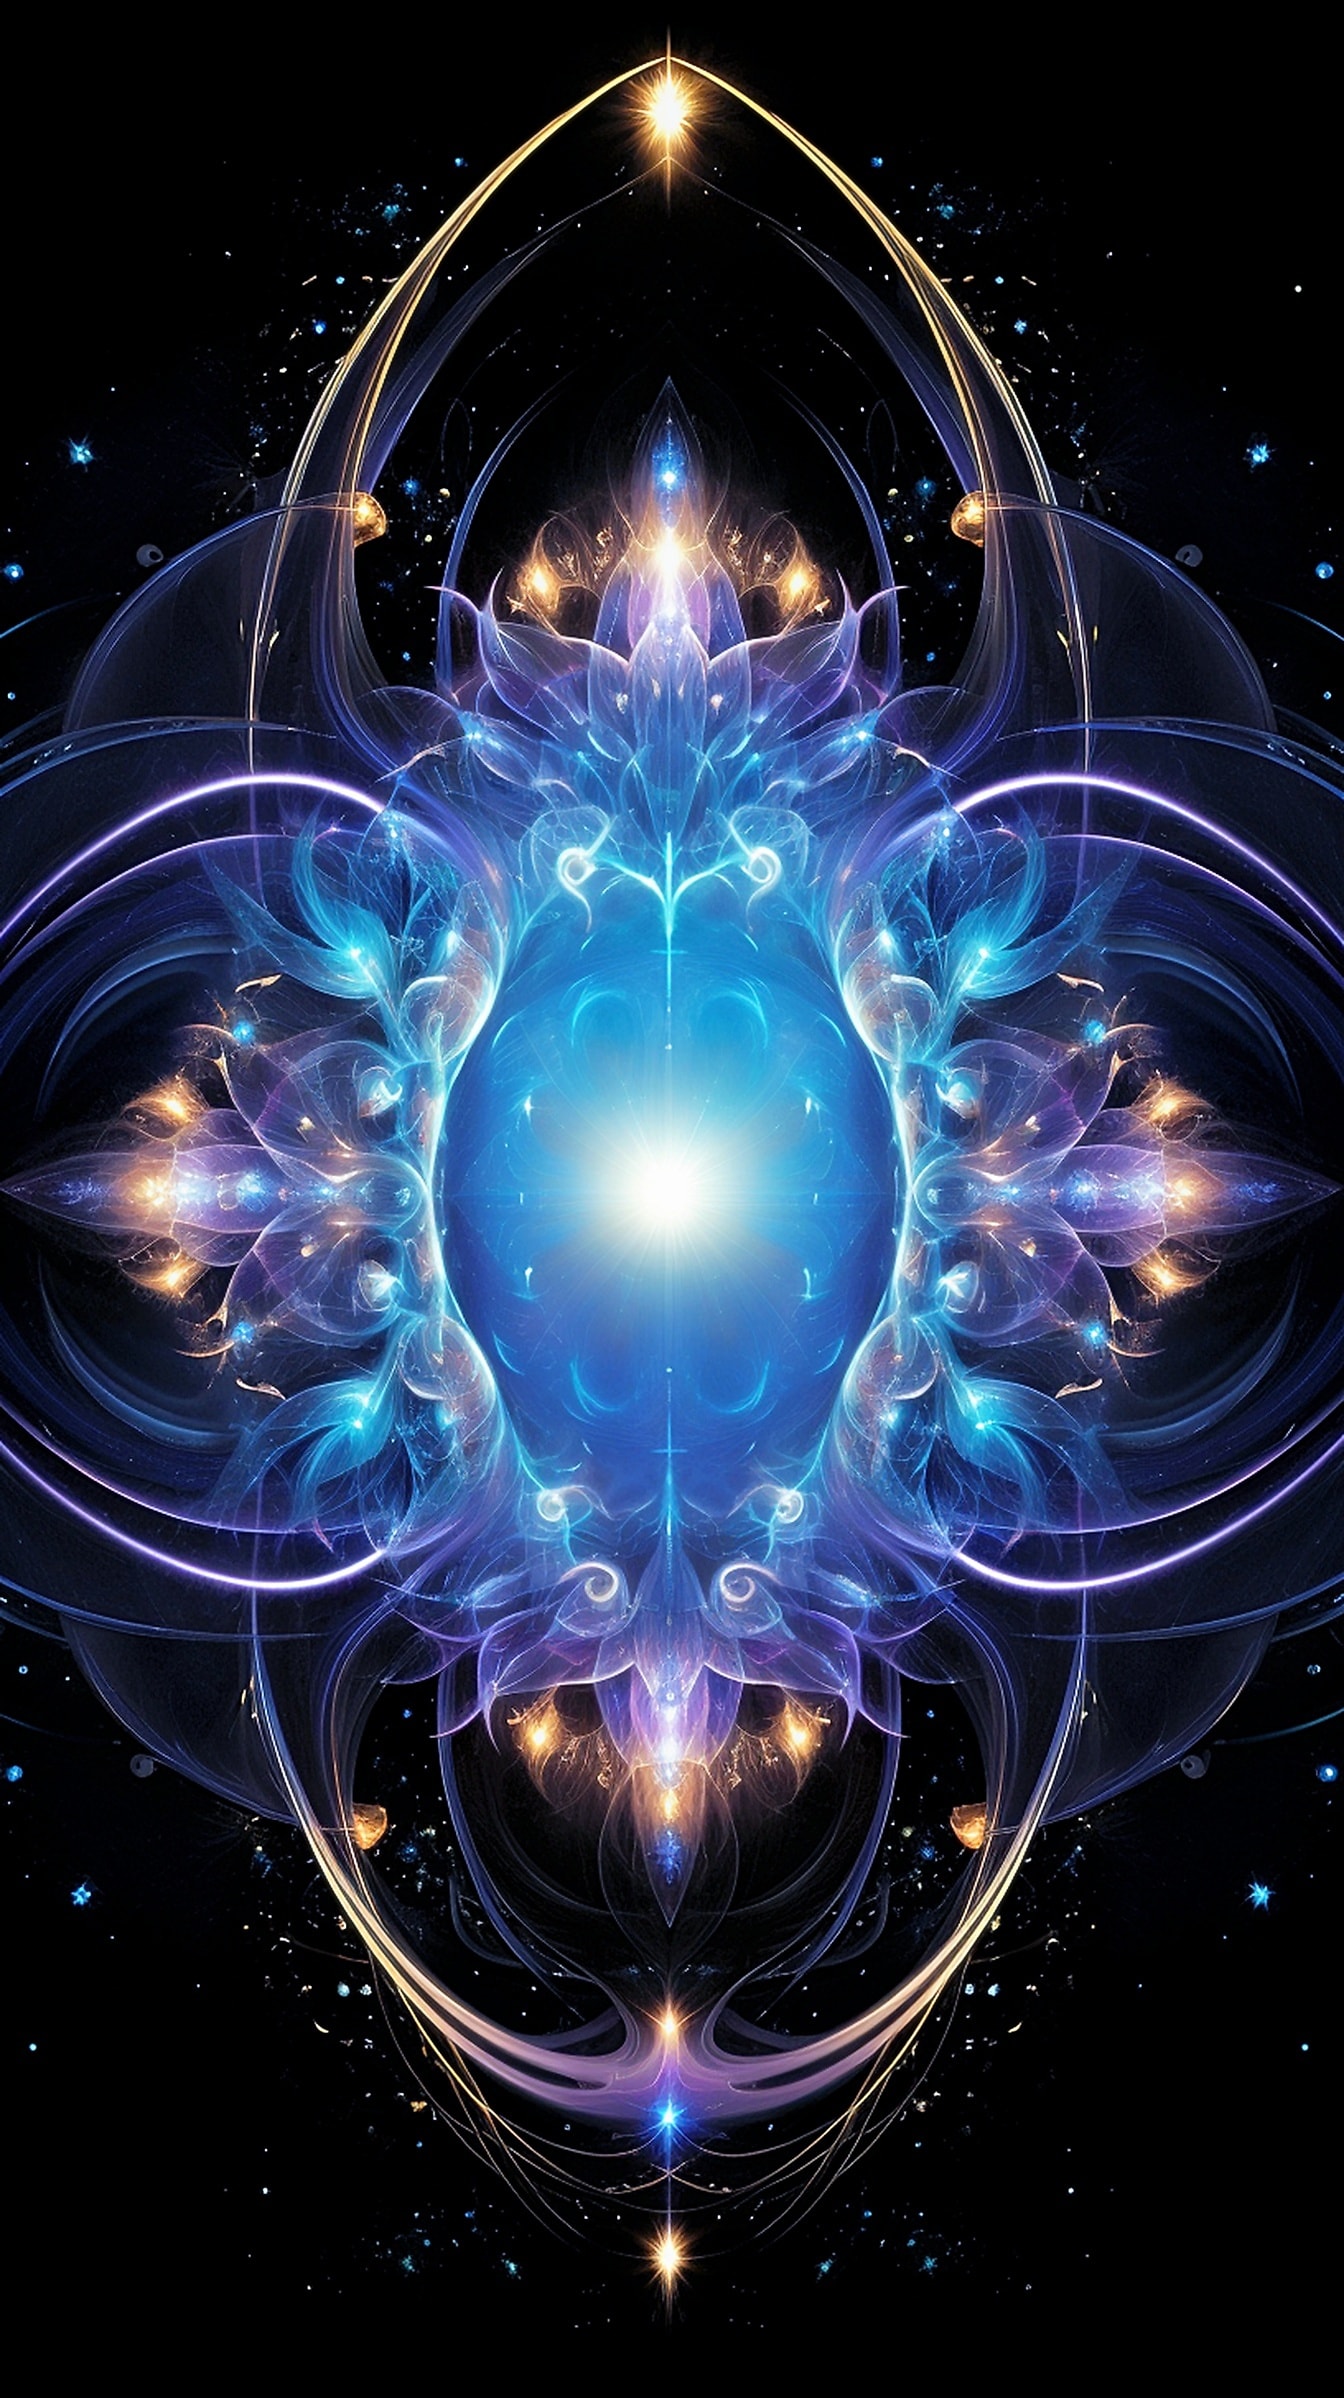 Fantasy fractal design with a round center illustrating artistic symmetry